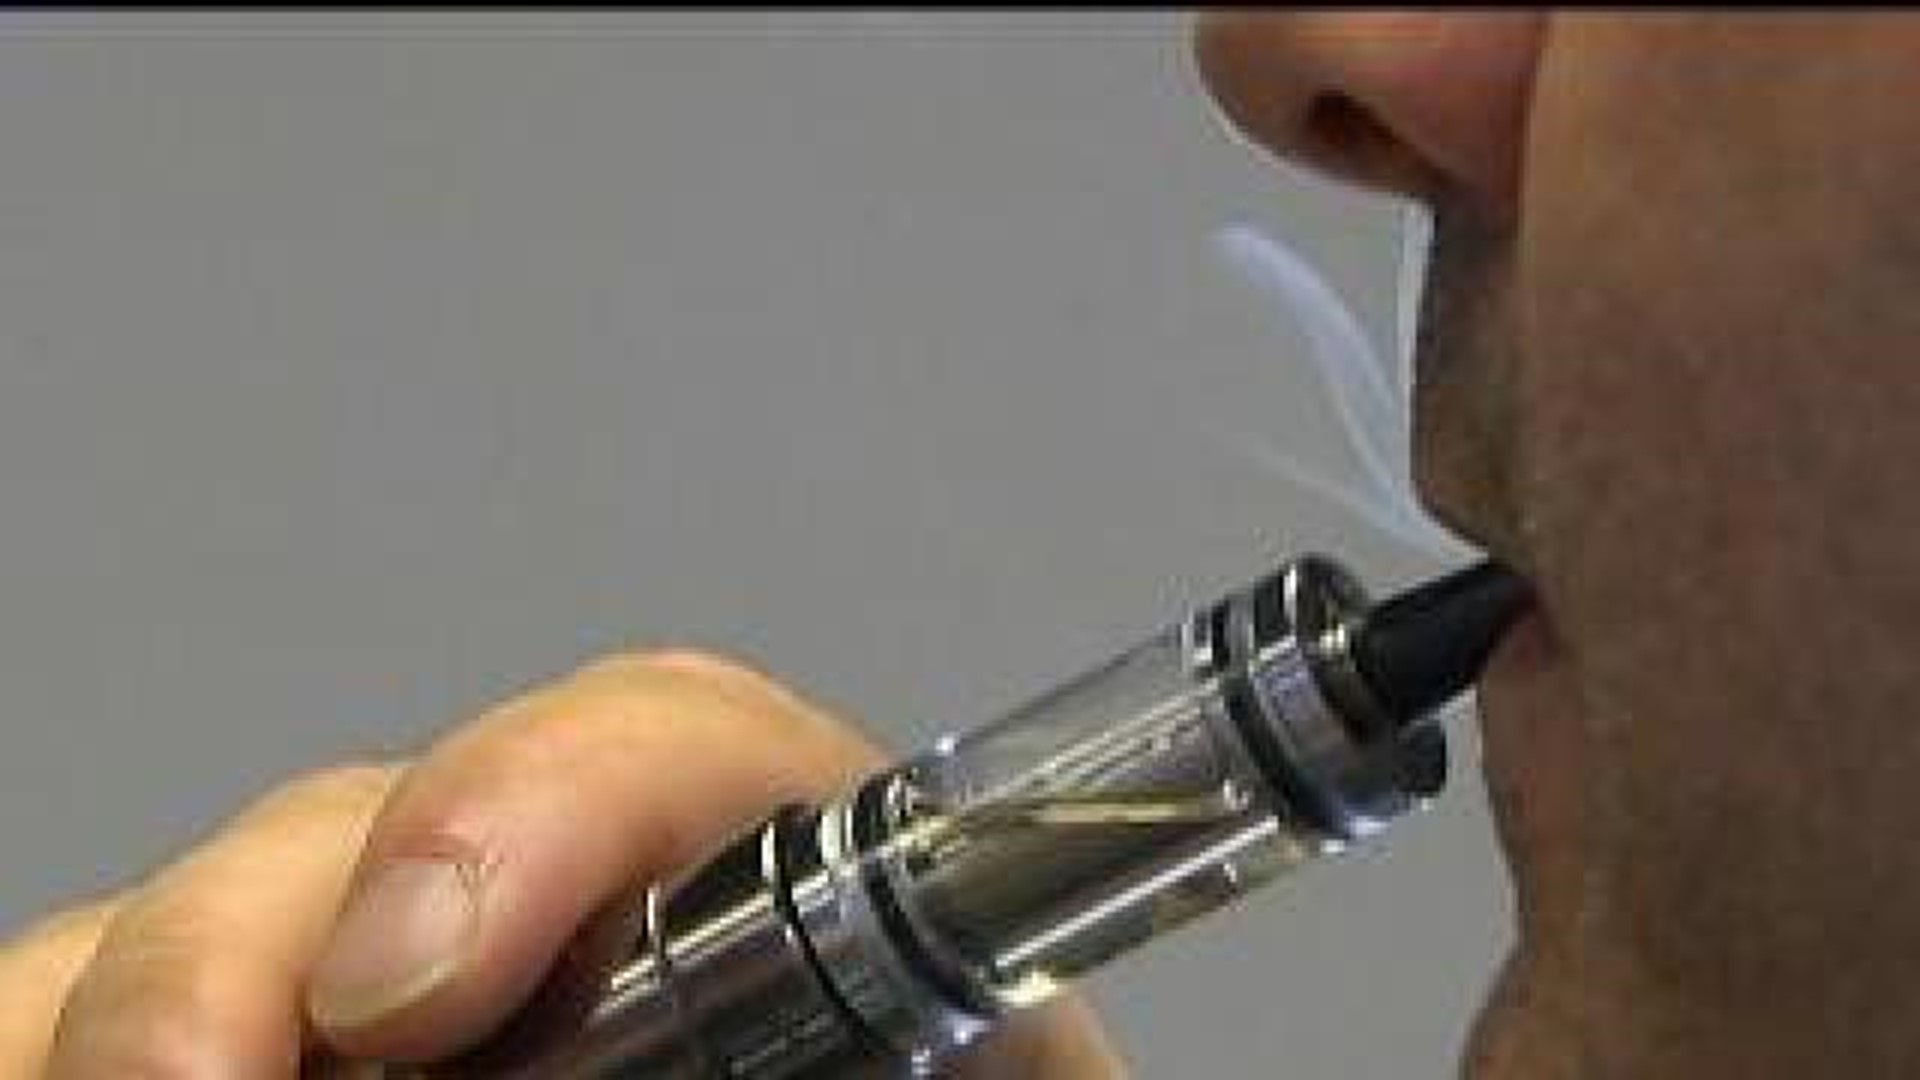 FDA urged to regulate e-cigarettes